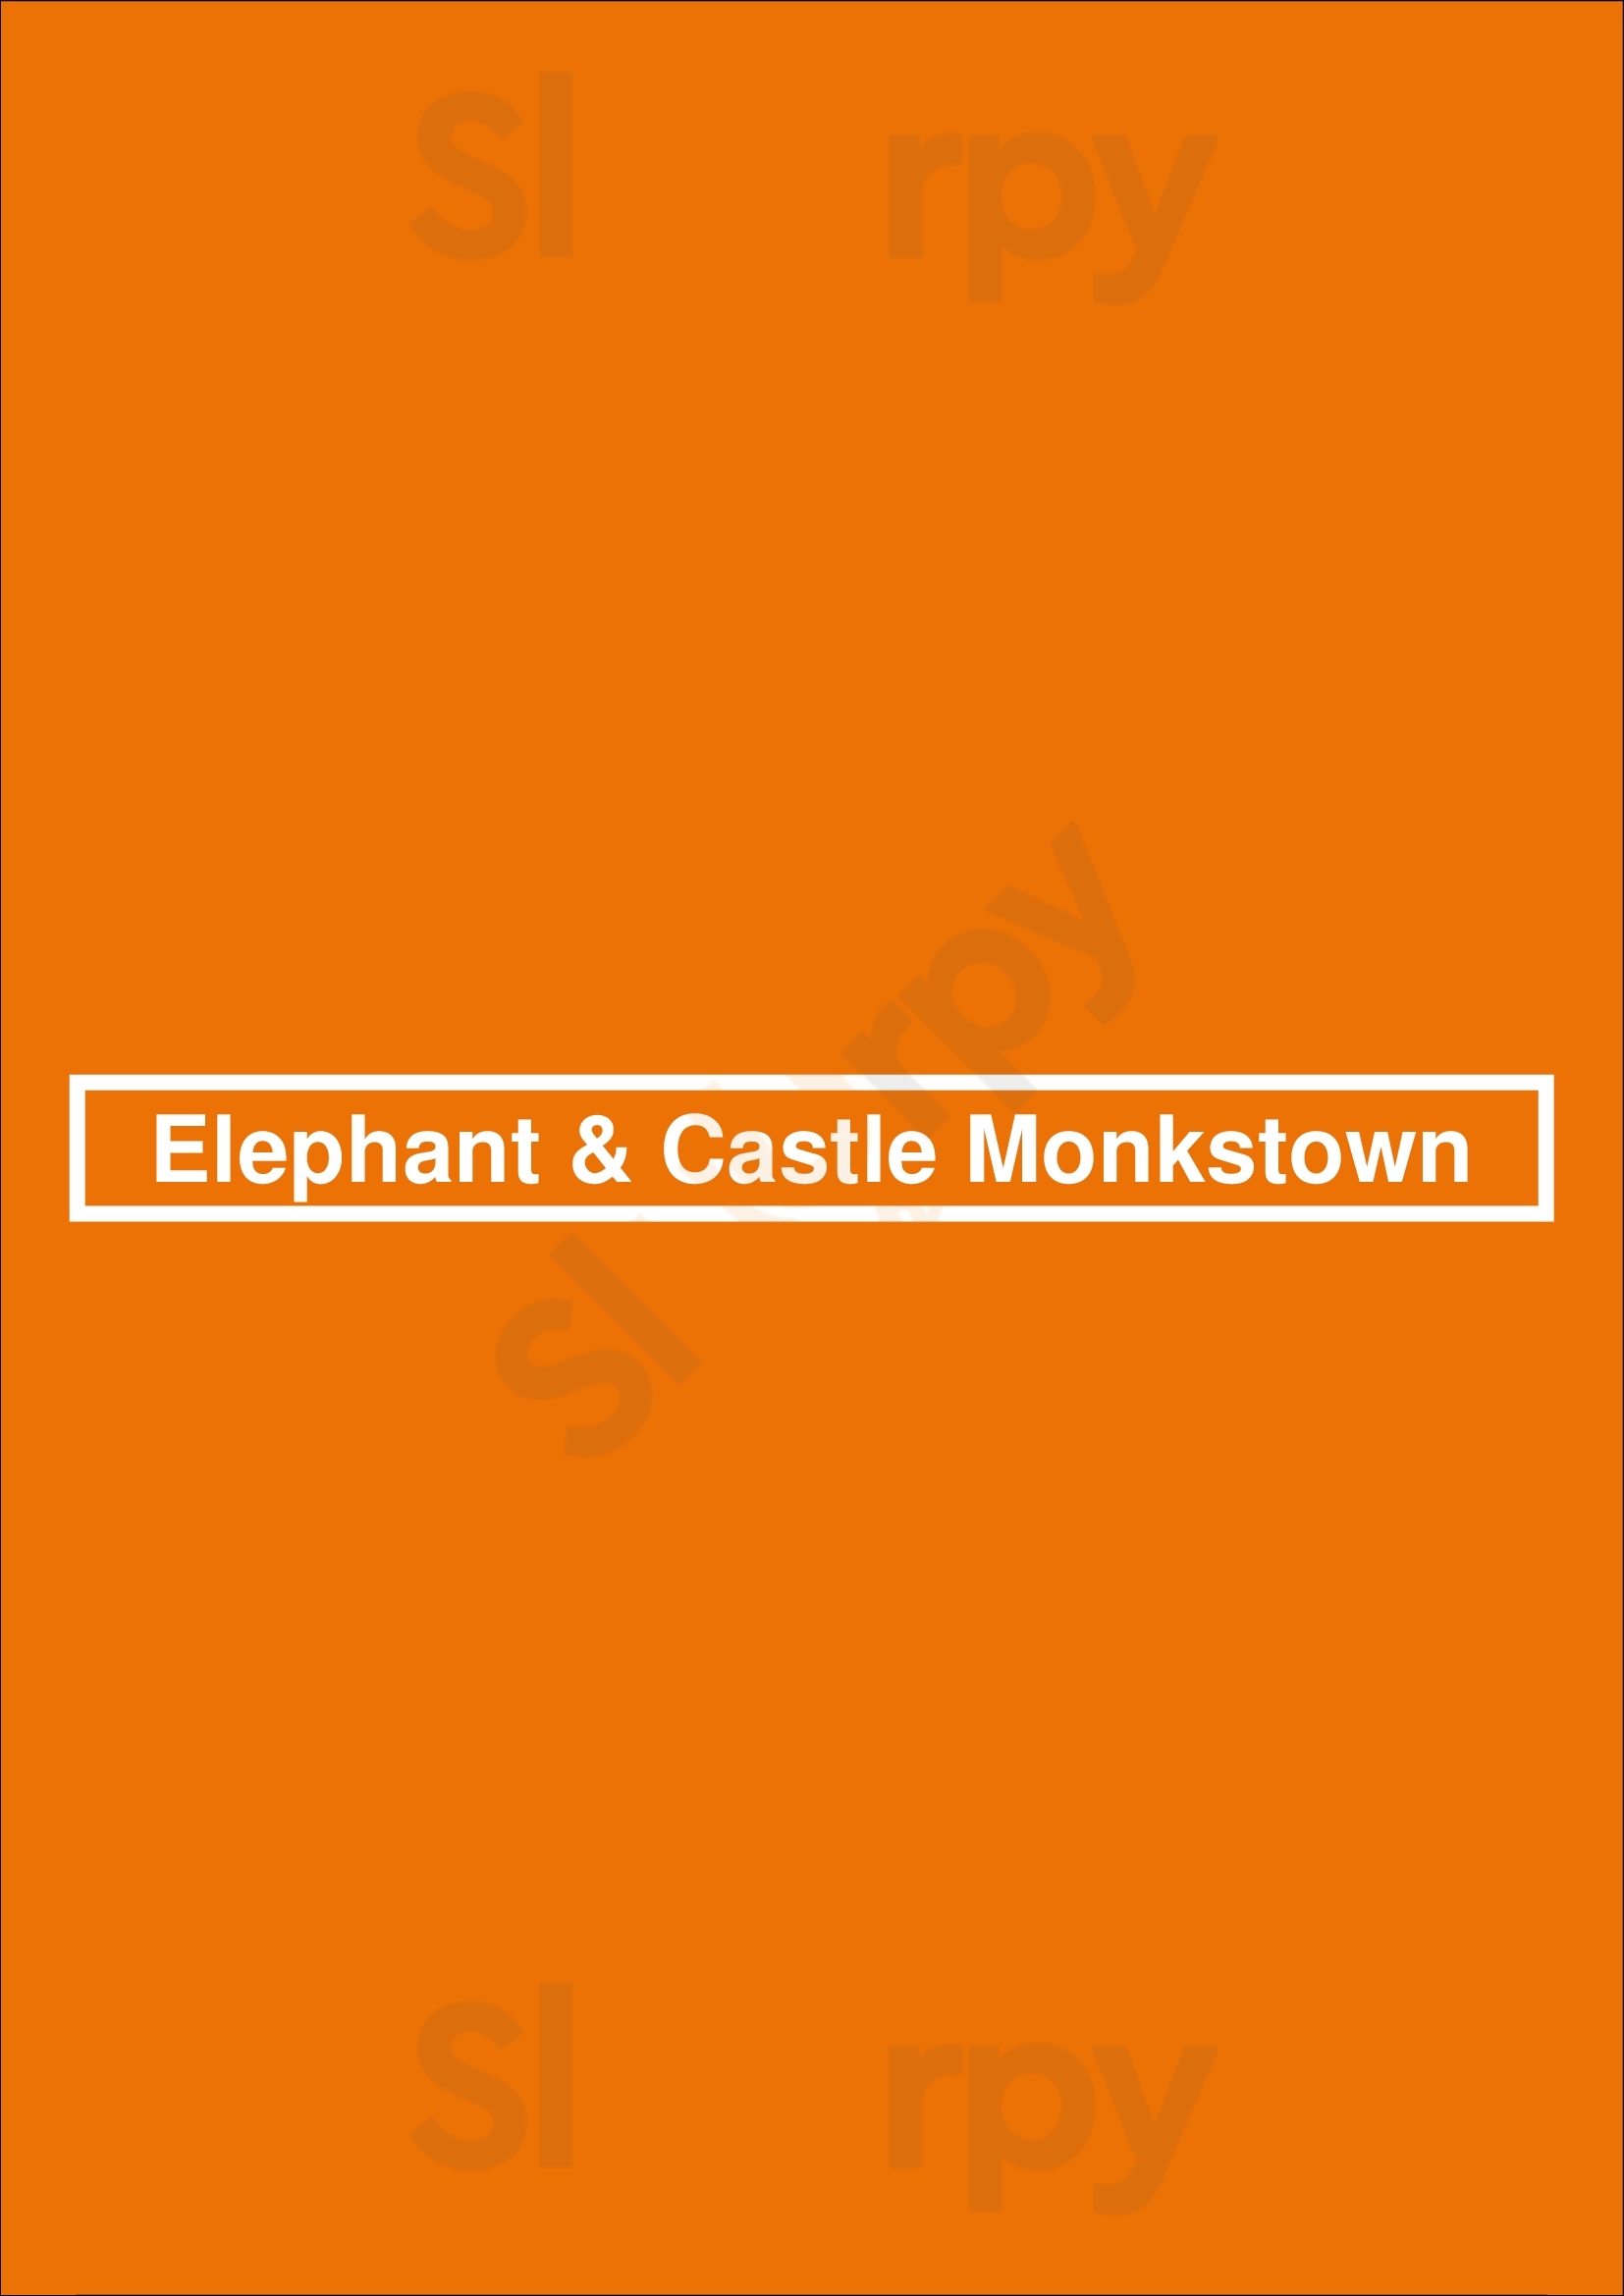 Elephant & Castle Monkstown Monkstown Menu - 1